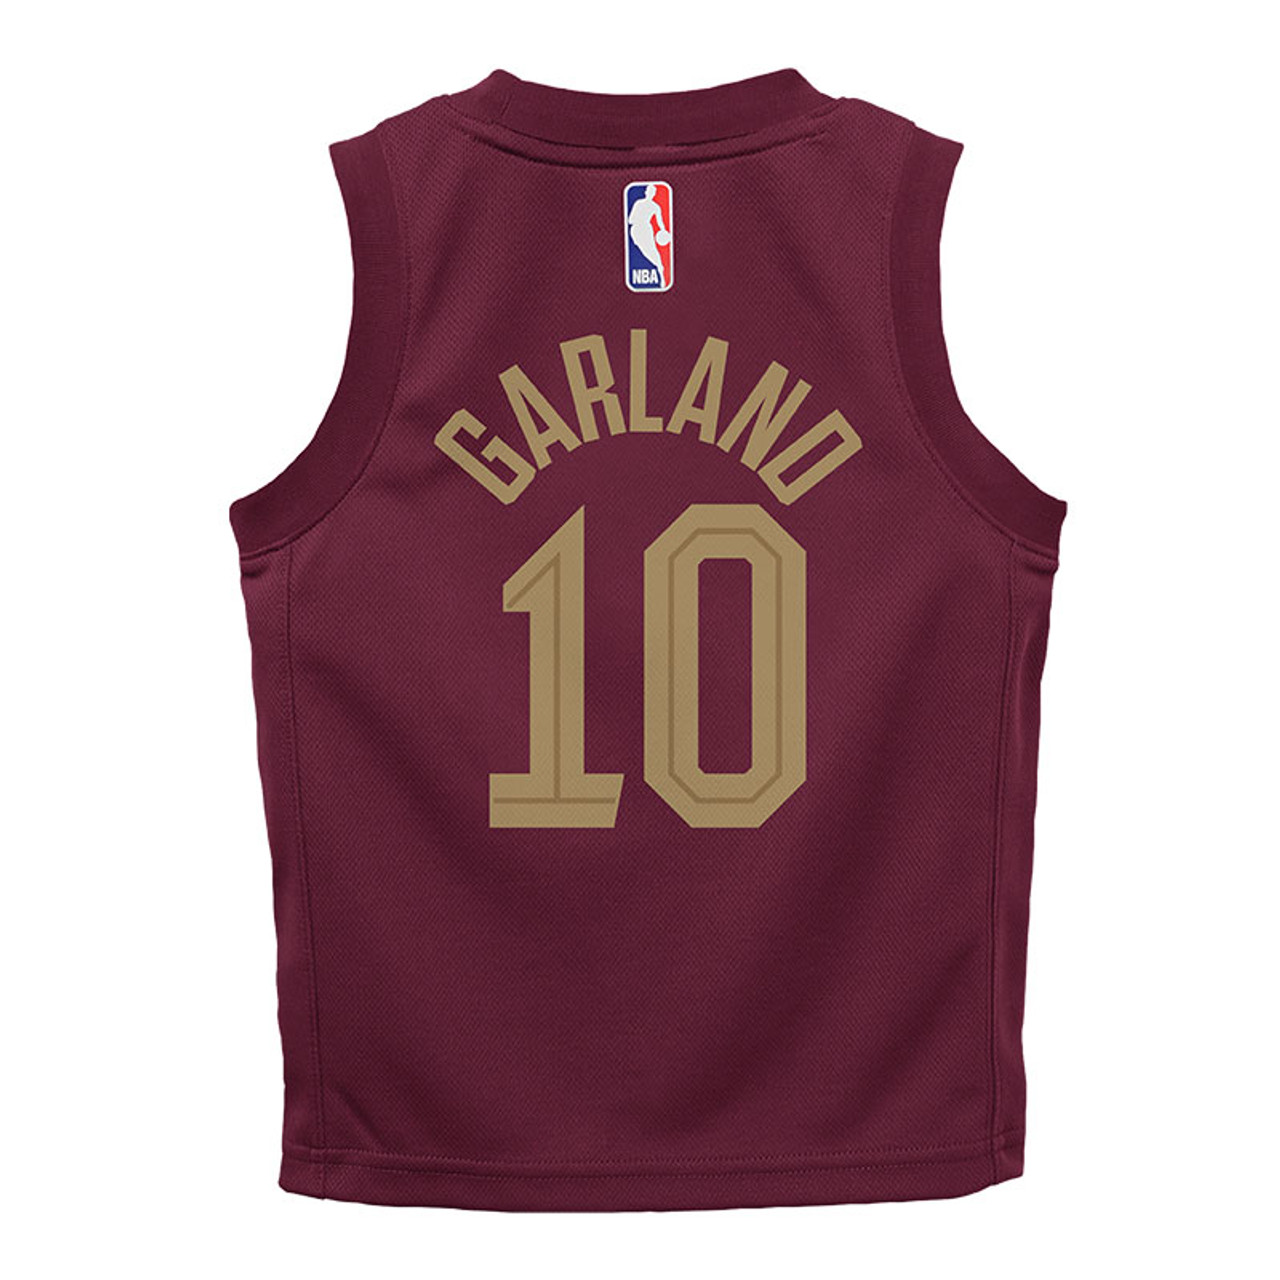 Darius Garland - Cleveland Cavaliers - Game-Worn City Edition